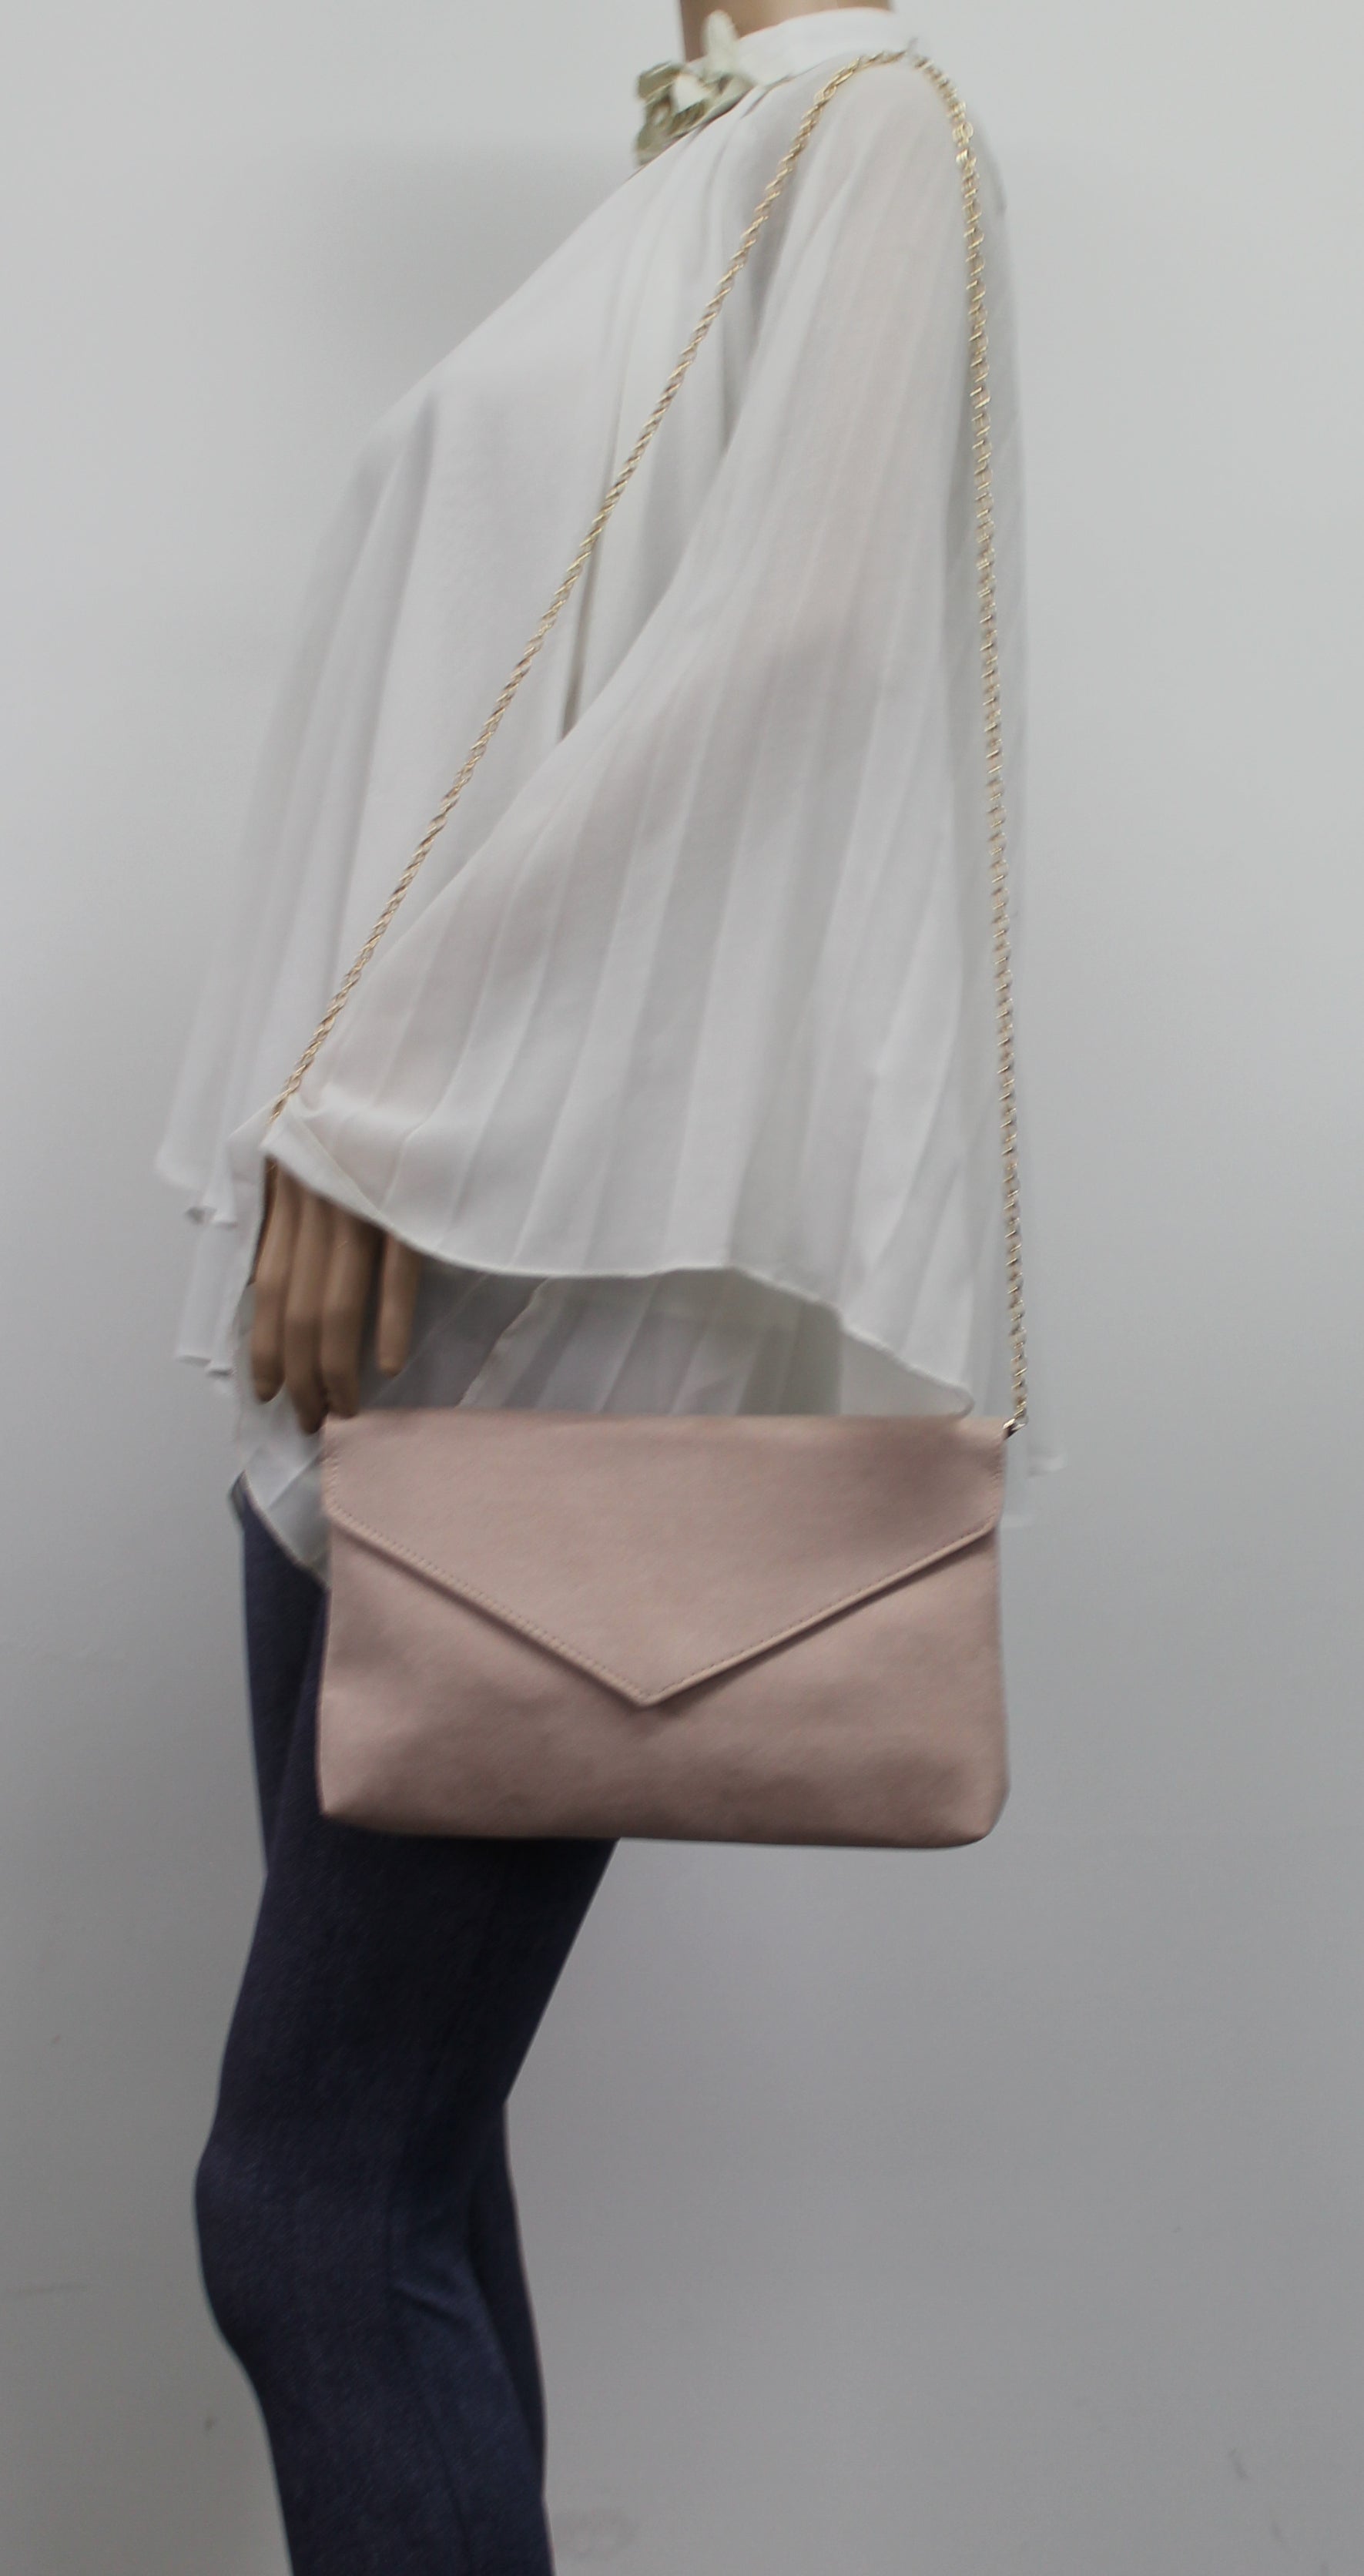 SWANKYSWANS Rosa Clutch Bag Beige Cute Cheap Clutch Bag For Weddings School and Work